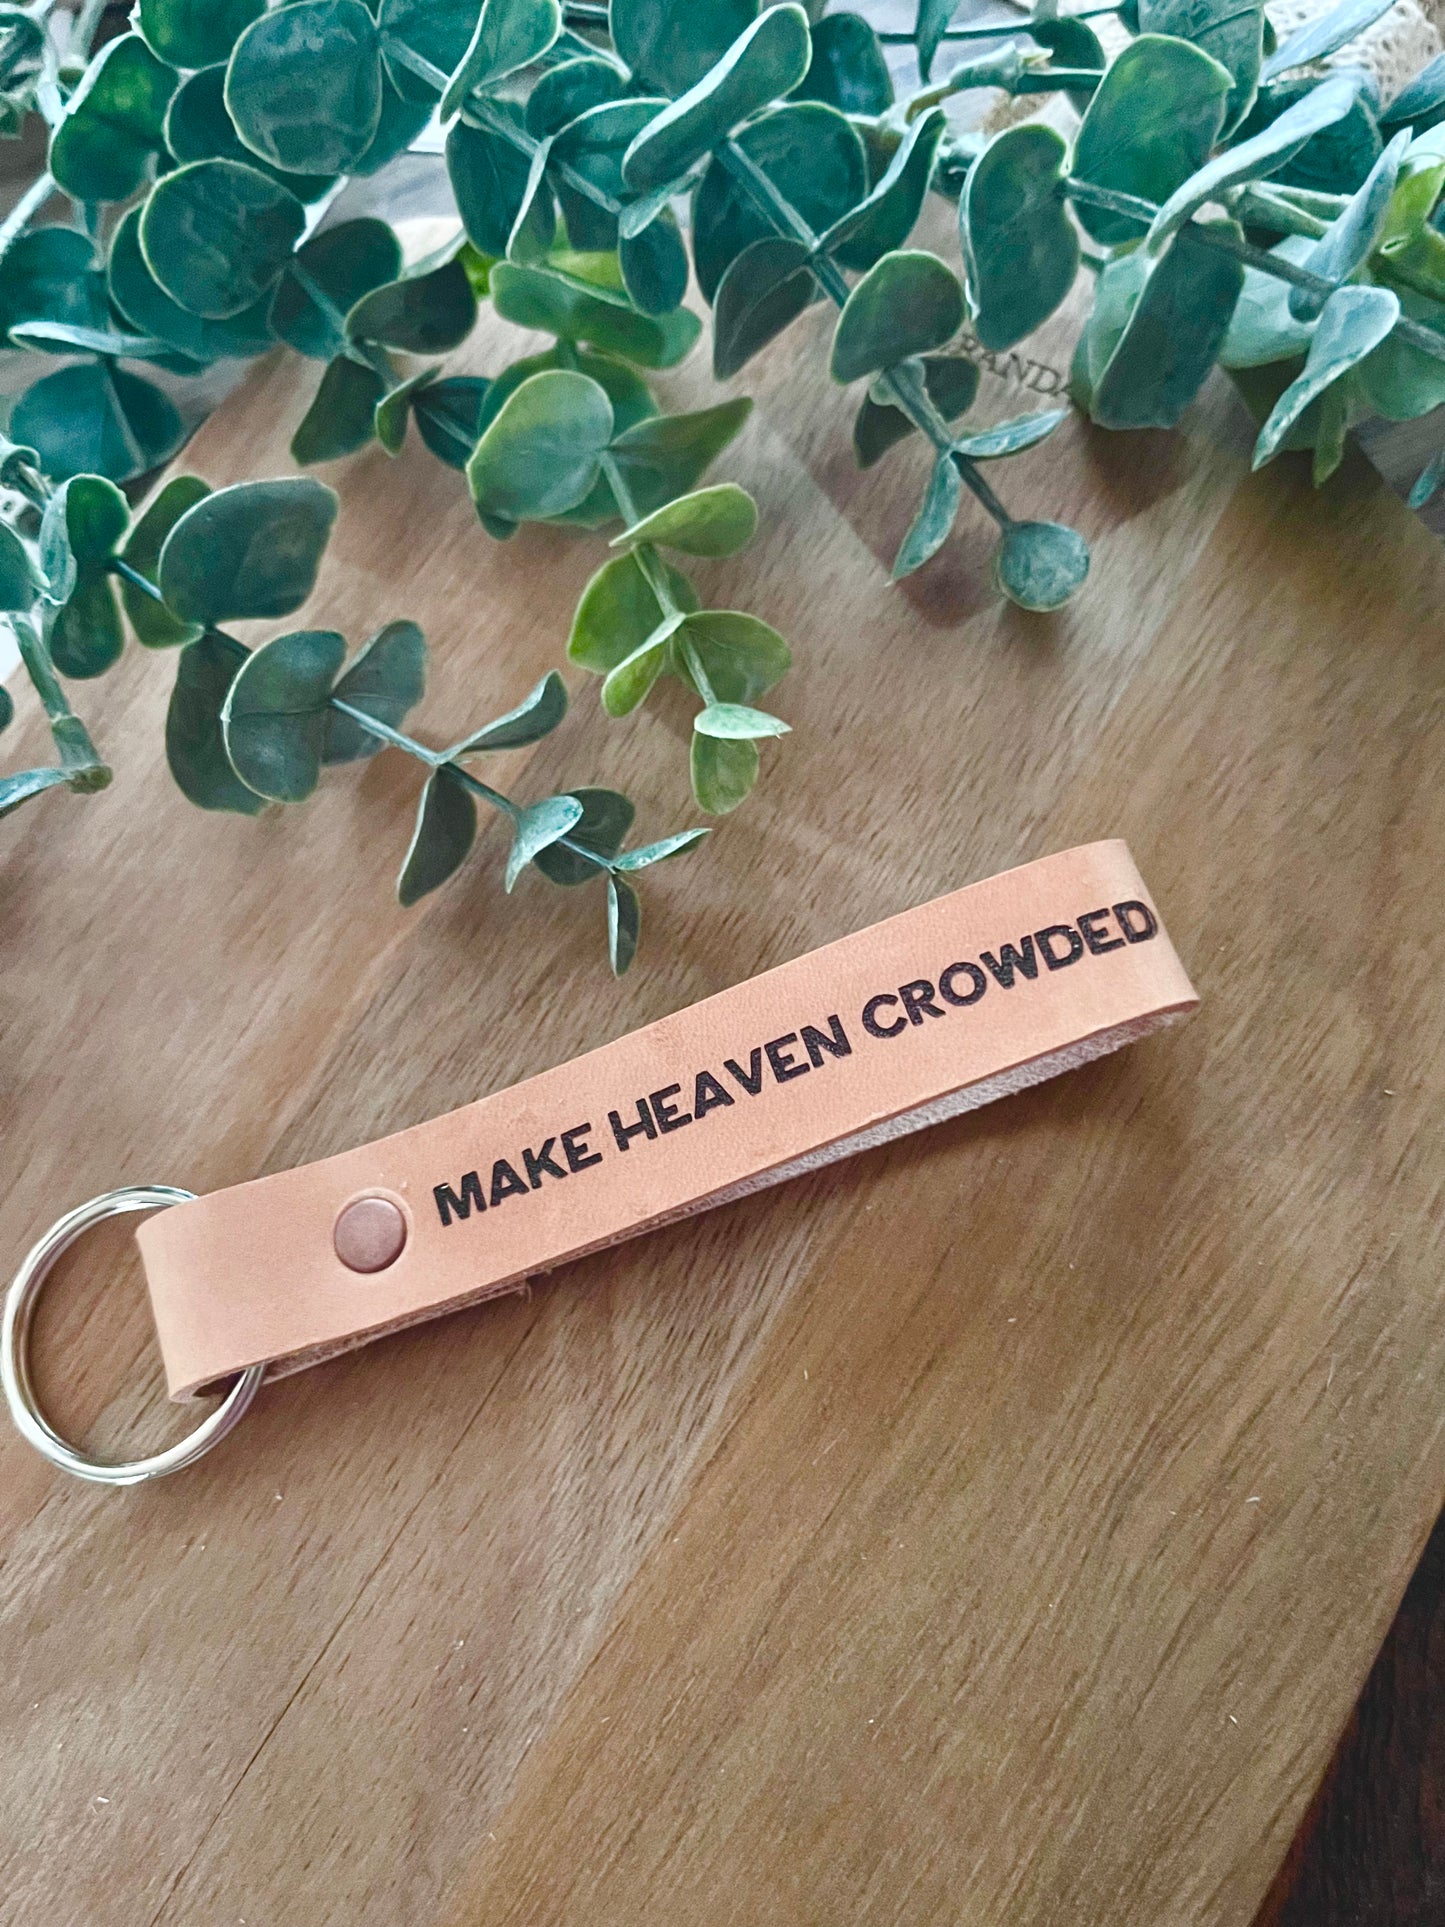 Make Heaven Crowded  - Genuine Leather Keychain